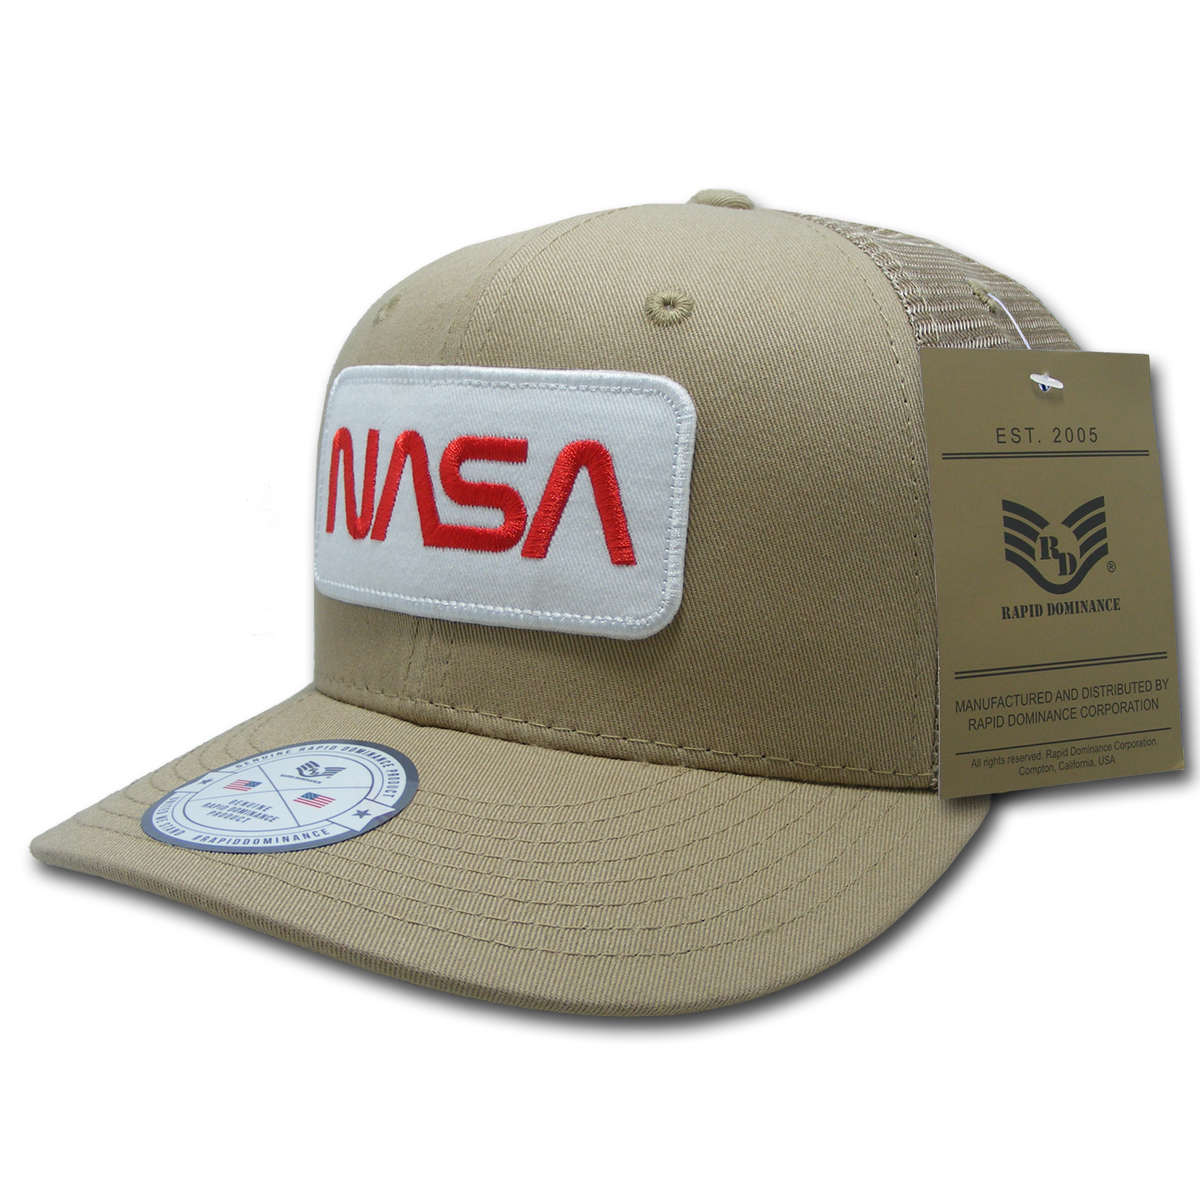 NASA Patch Caps